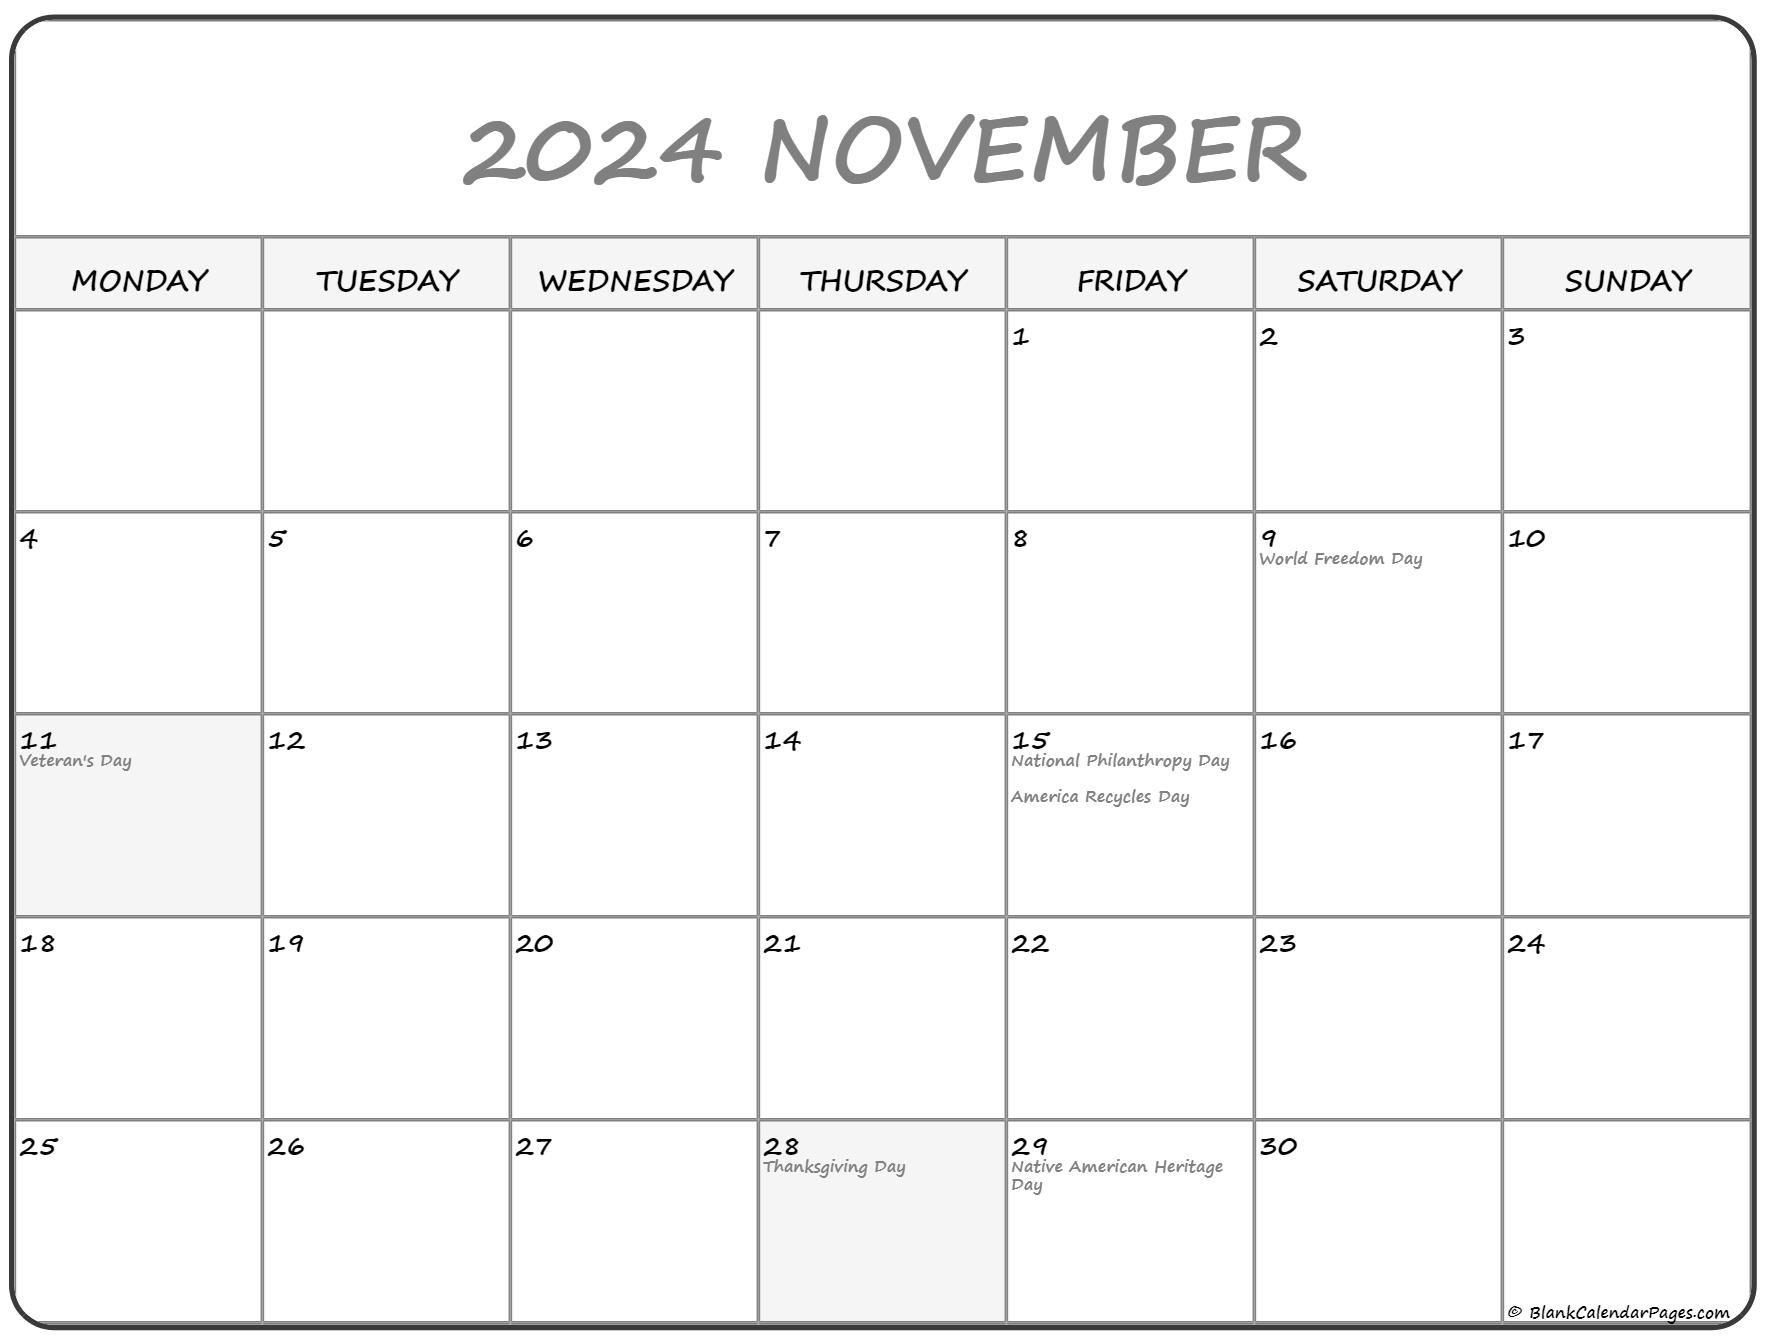 Sonderauslosung GlГјcksspirale November 2021